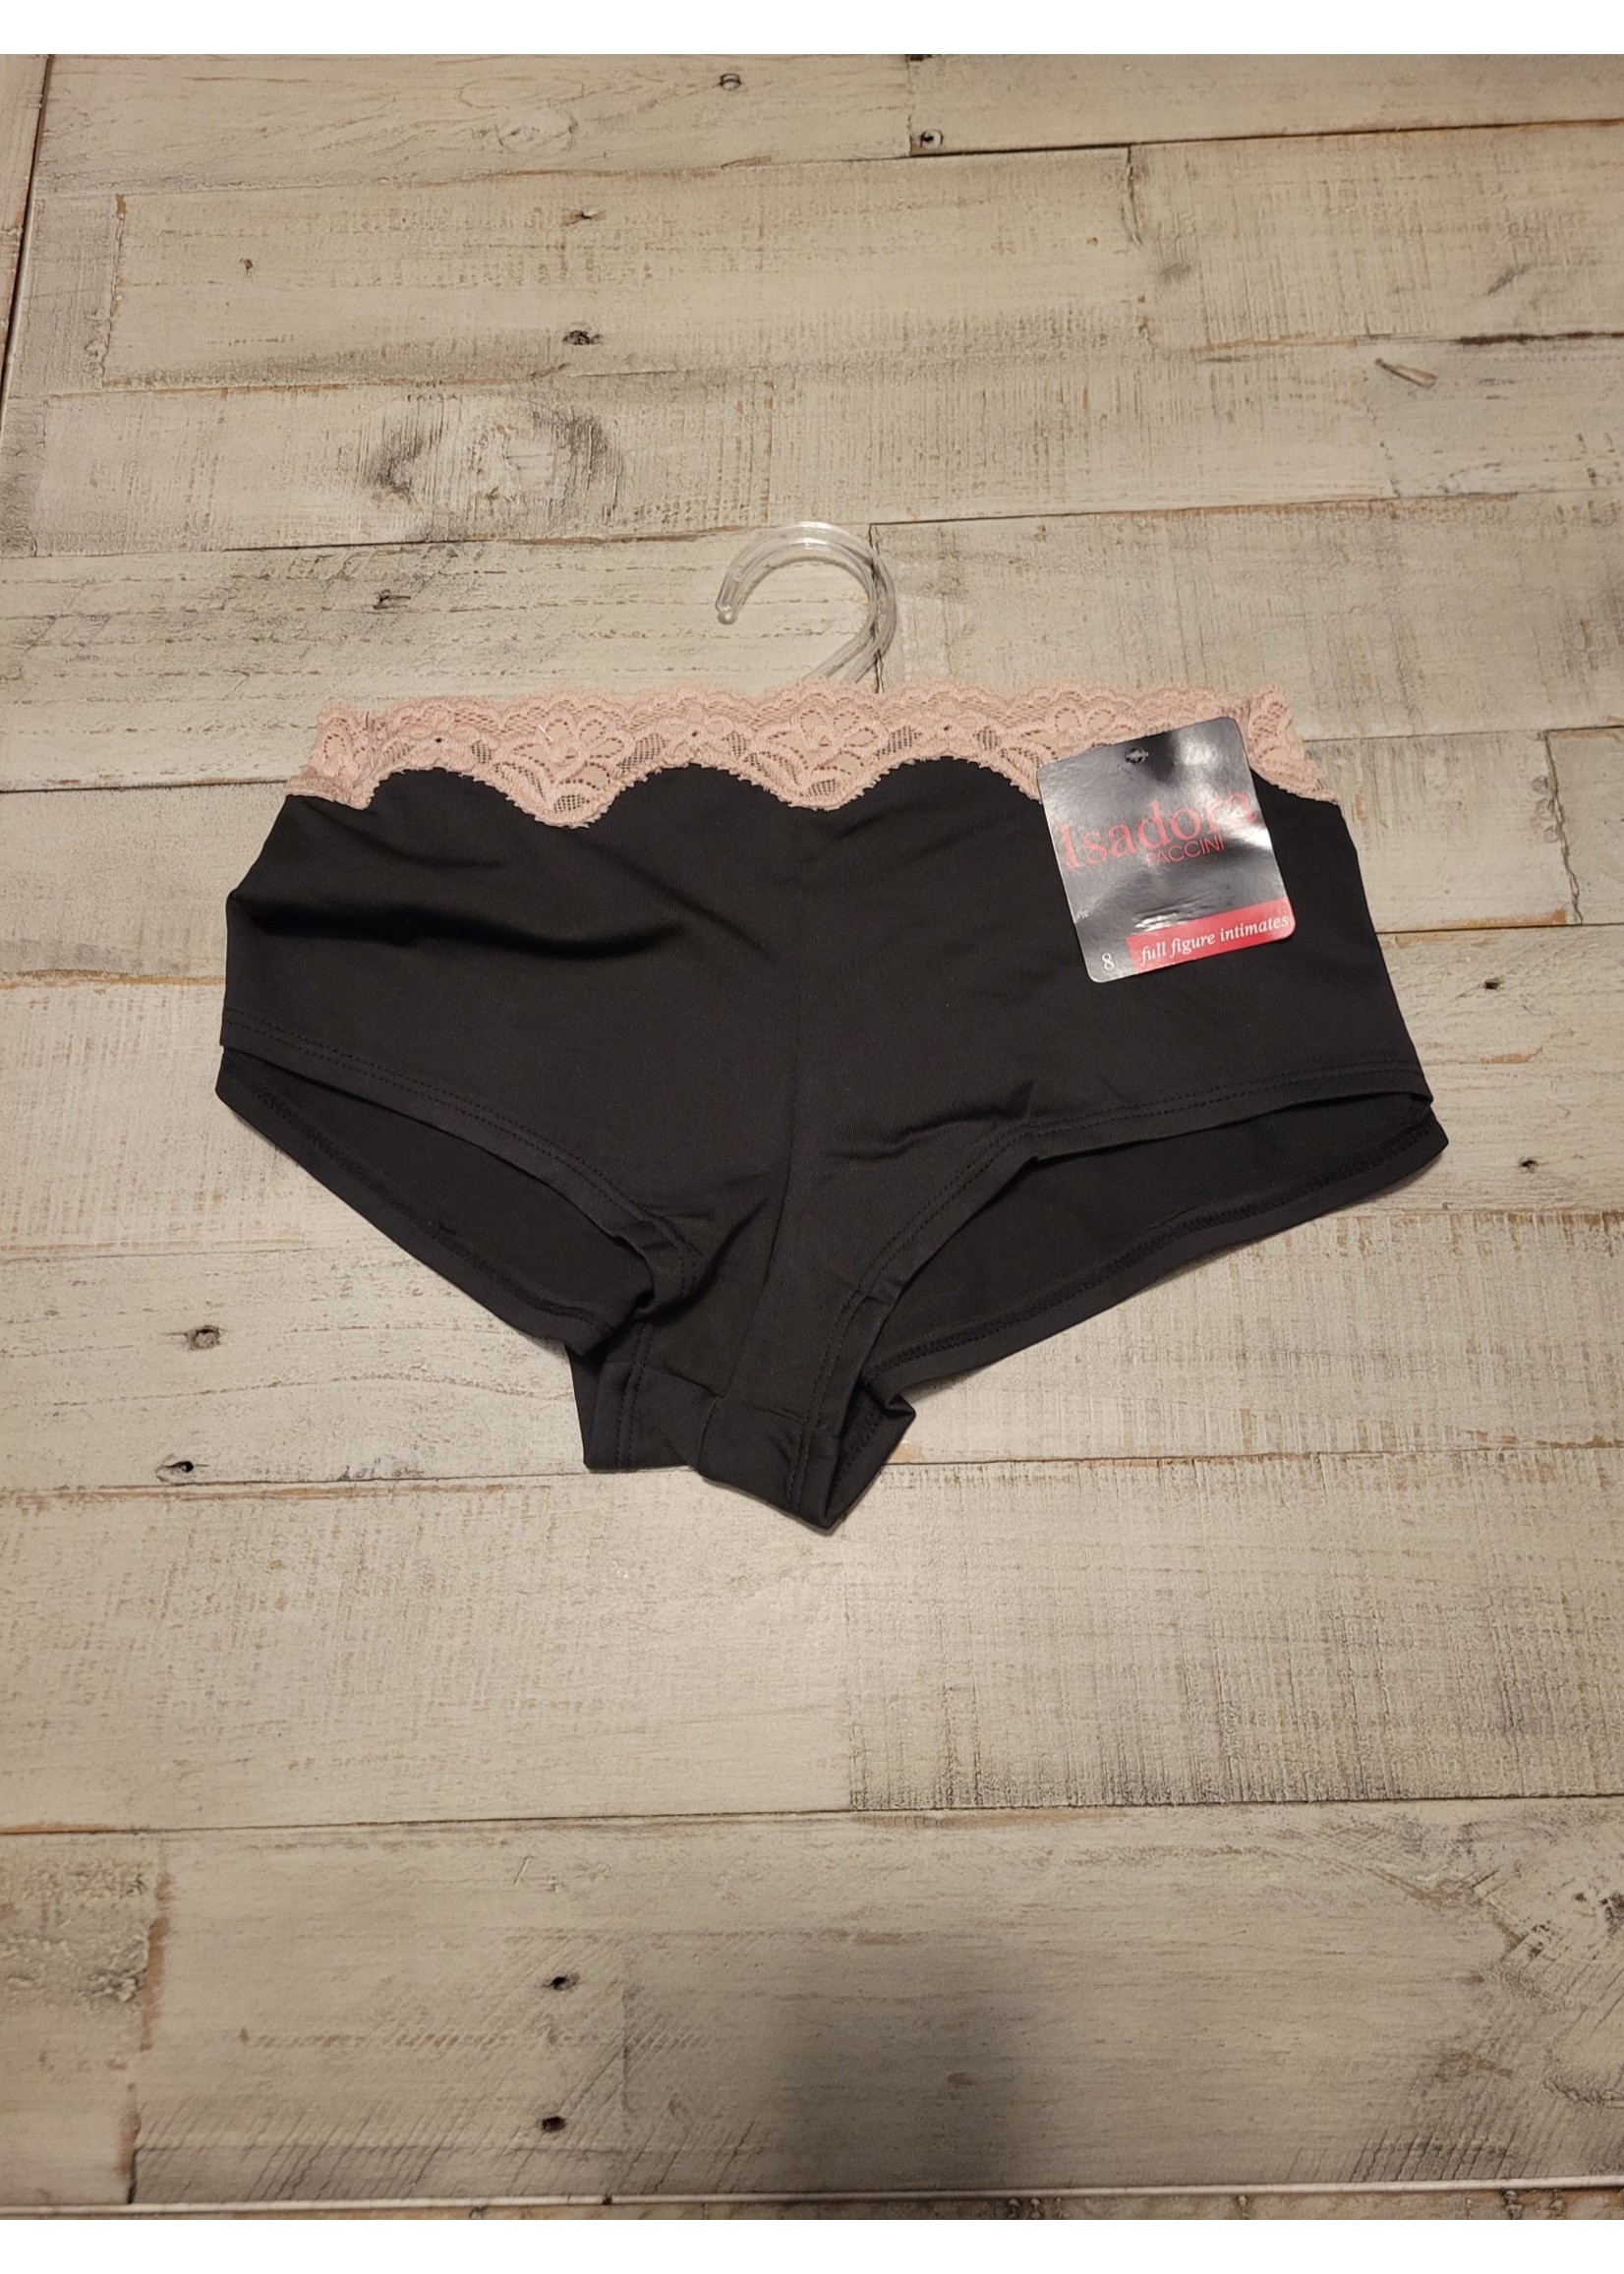 Wholesale Isadora Women's Panties Sheer Nylon With Size Option (144 Packs)